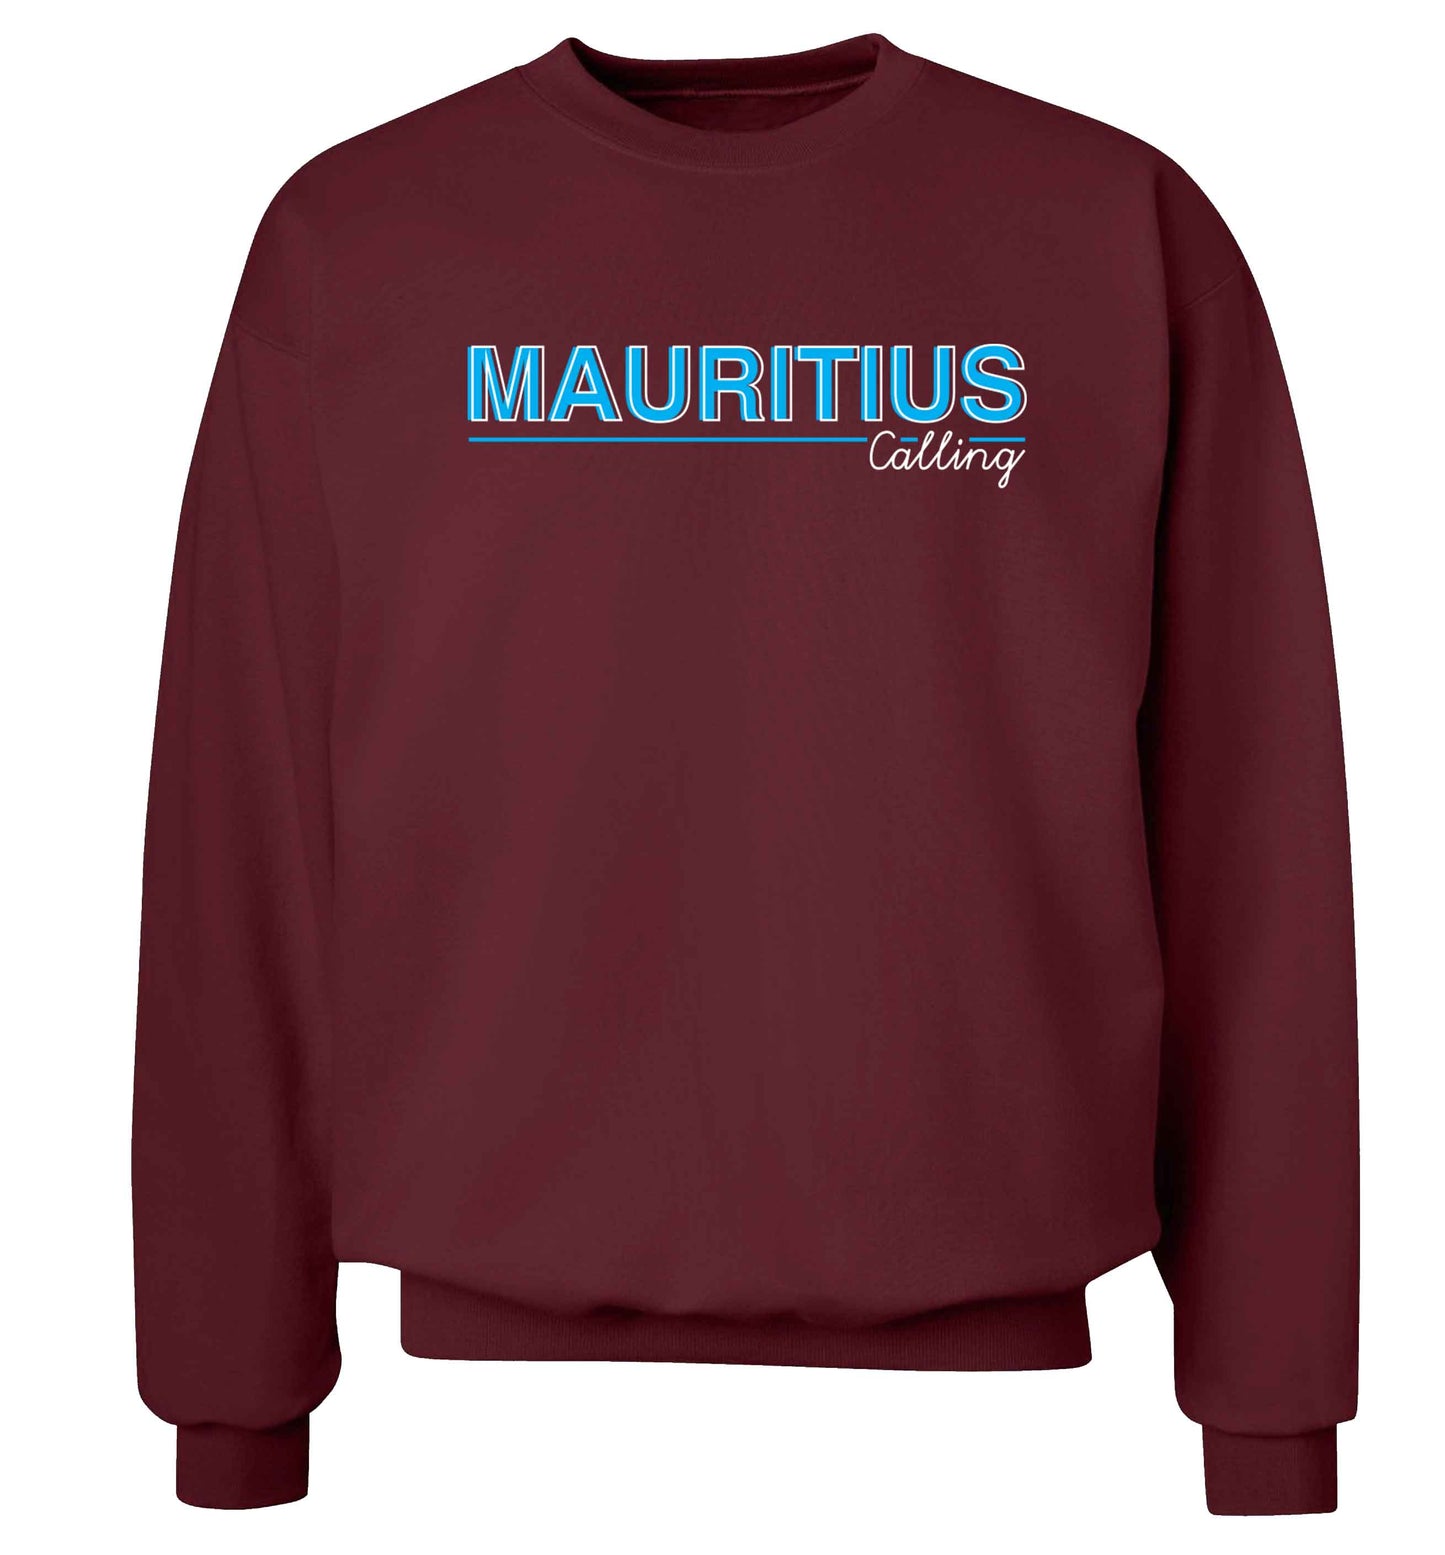 Mauritius calling Adult's unisex maroon Sweater 2XL